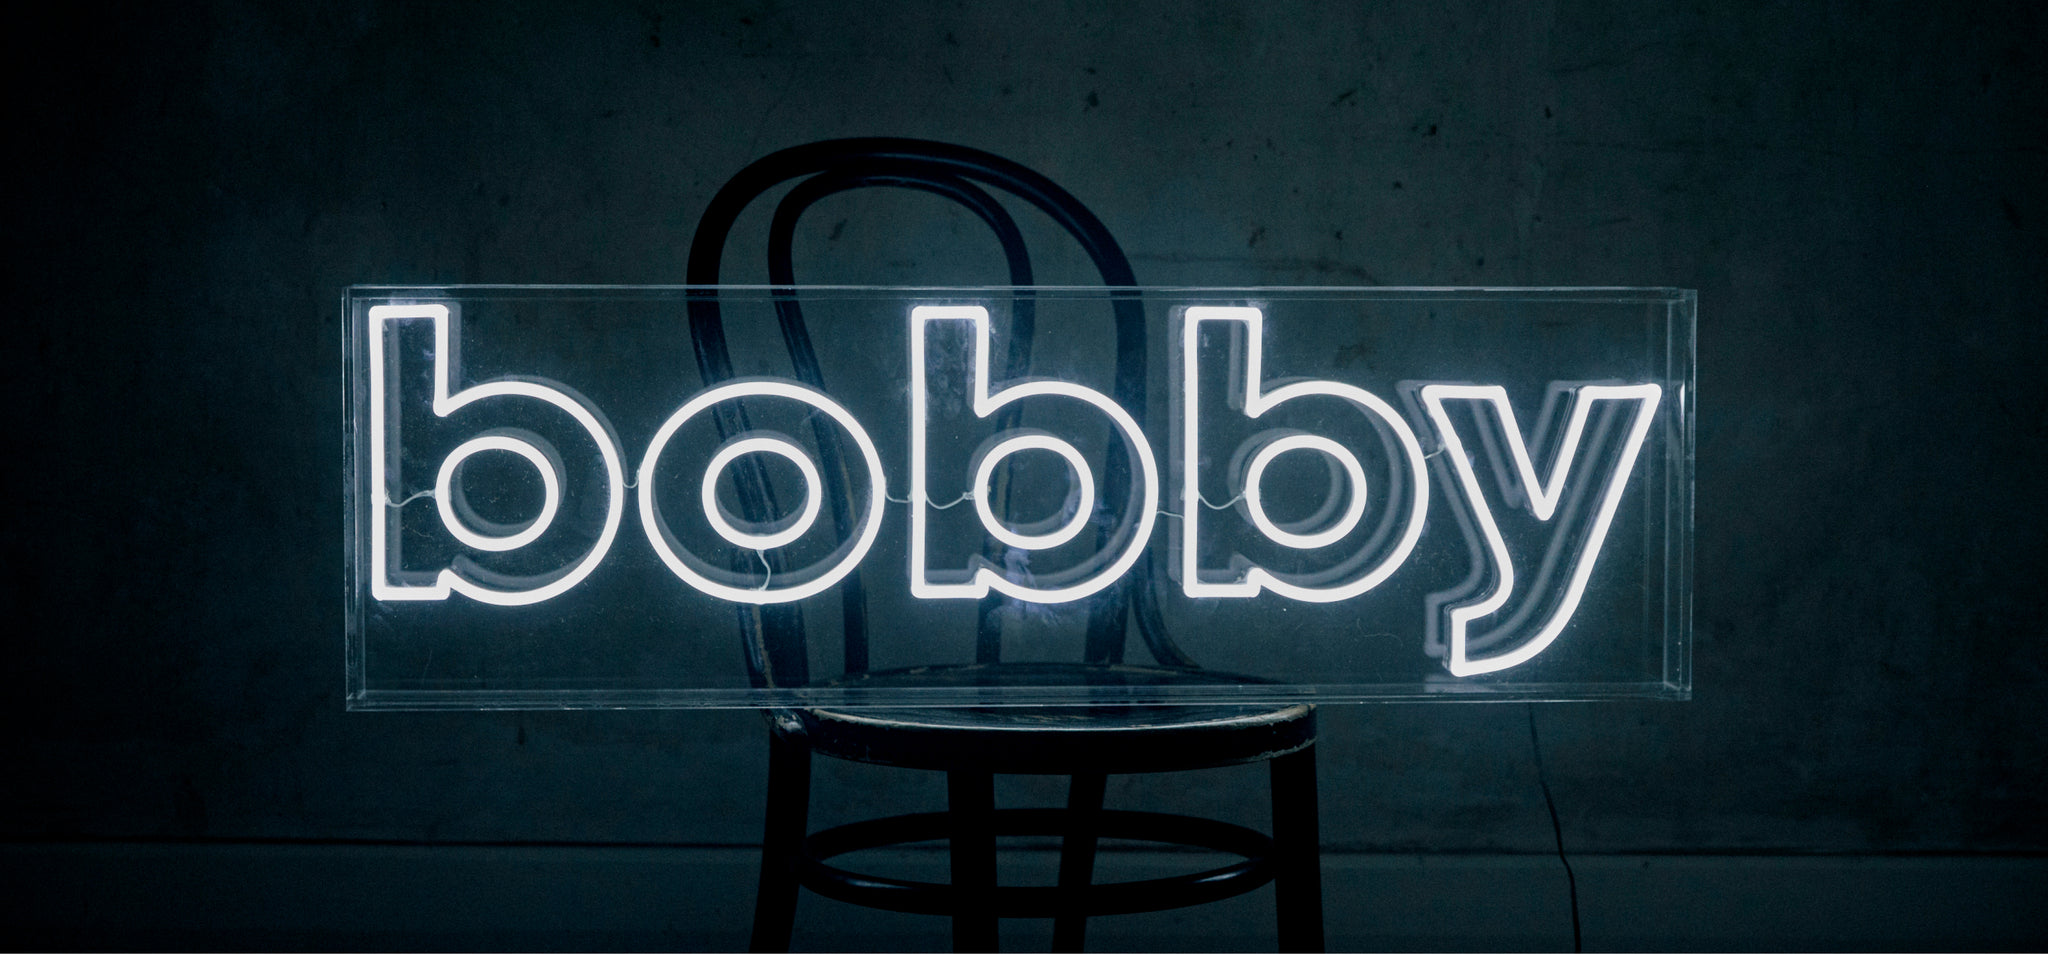 drink bobby, Australian made soft drink company neon logo